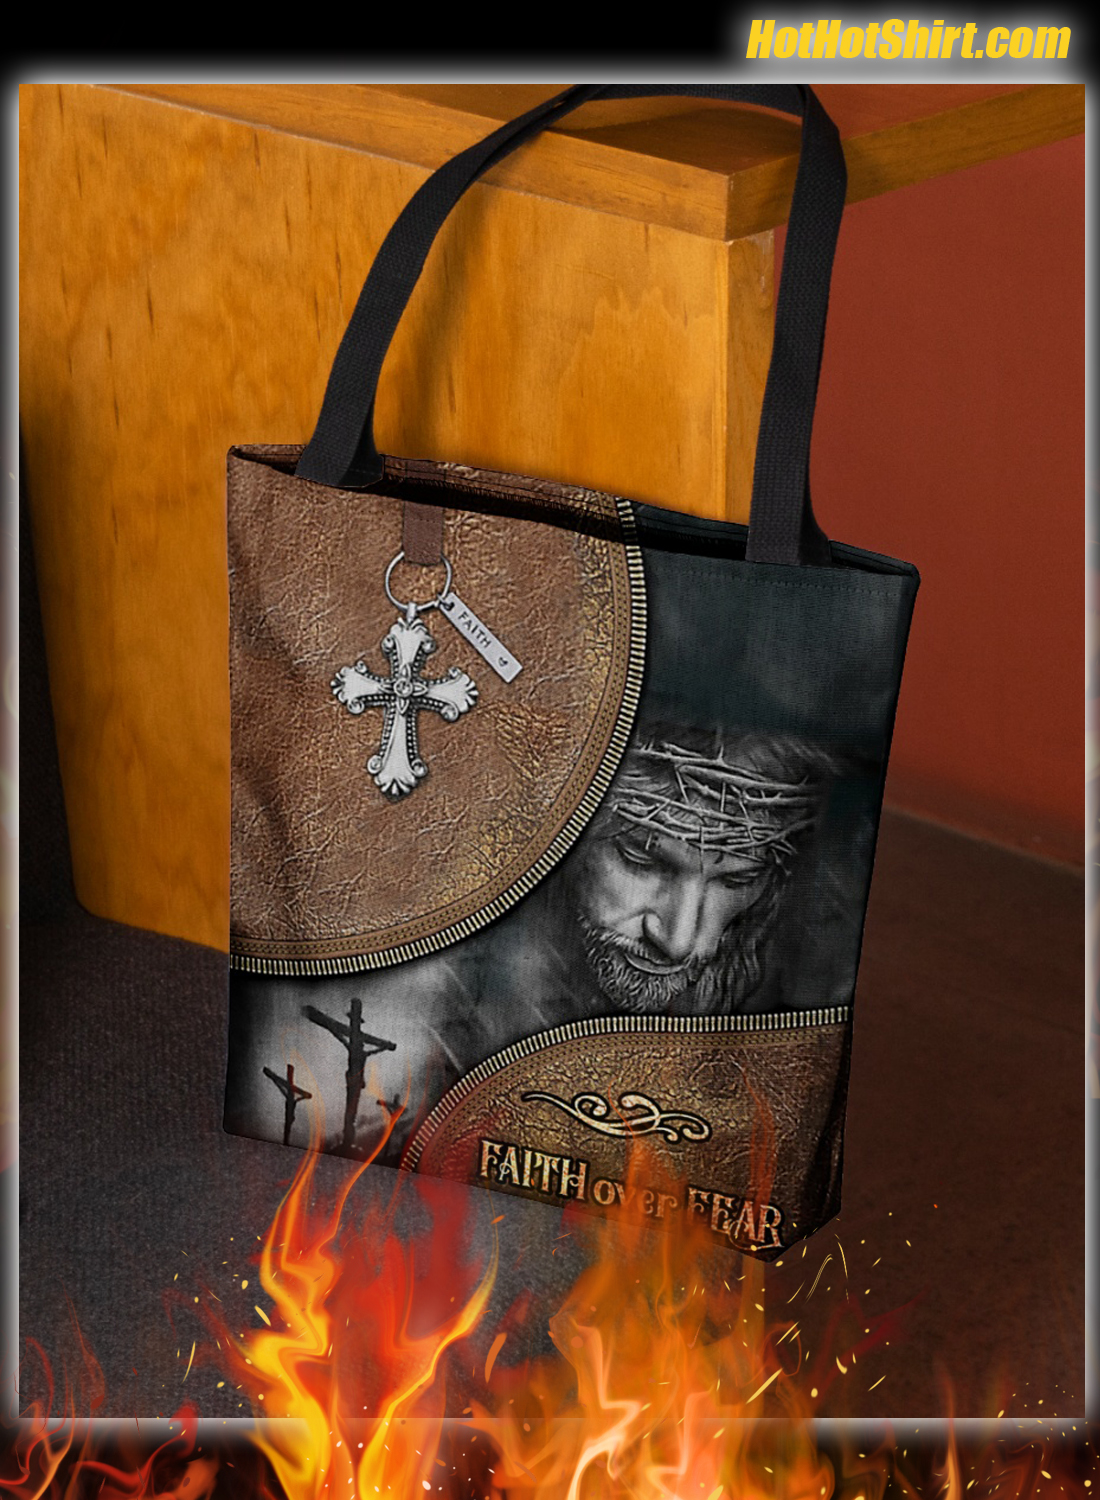 Jesus faith over fear tote bag